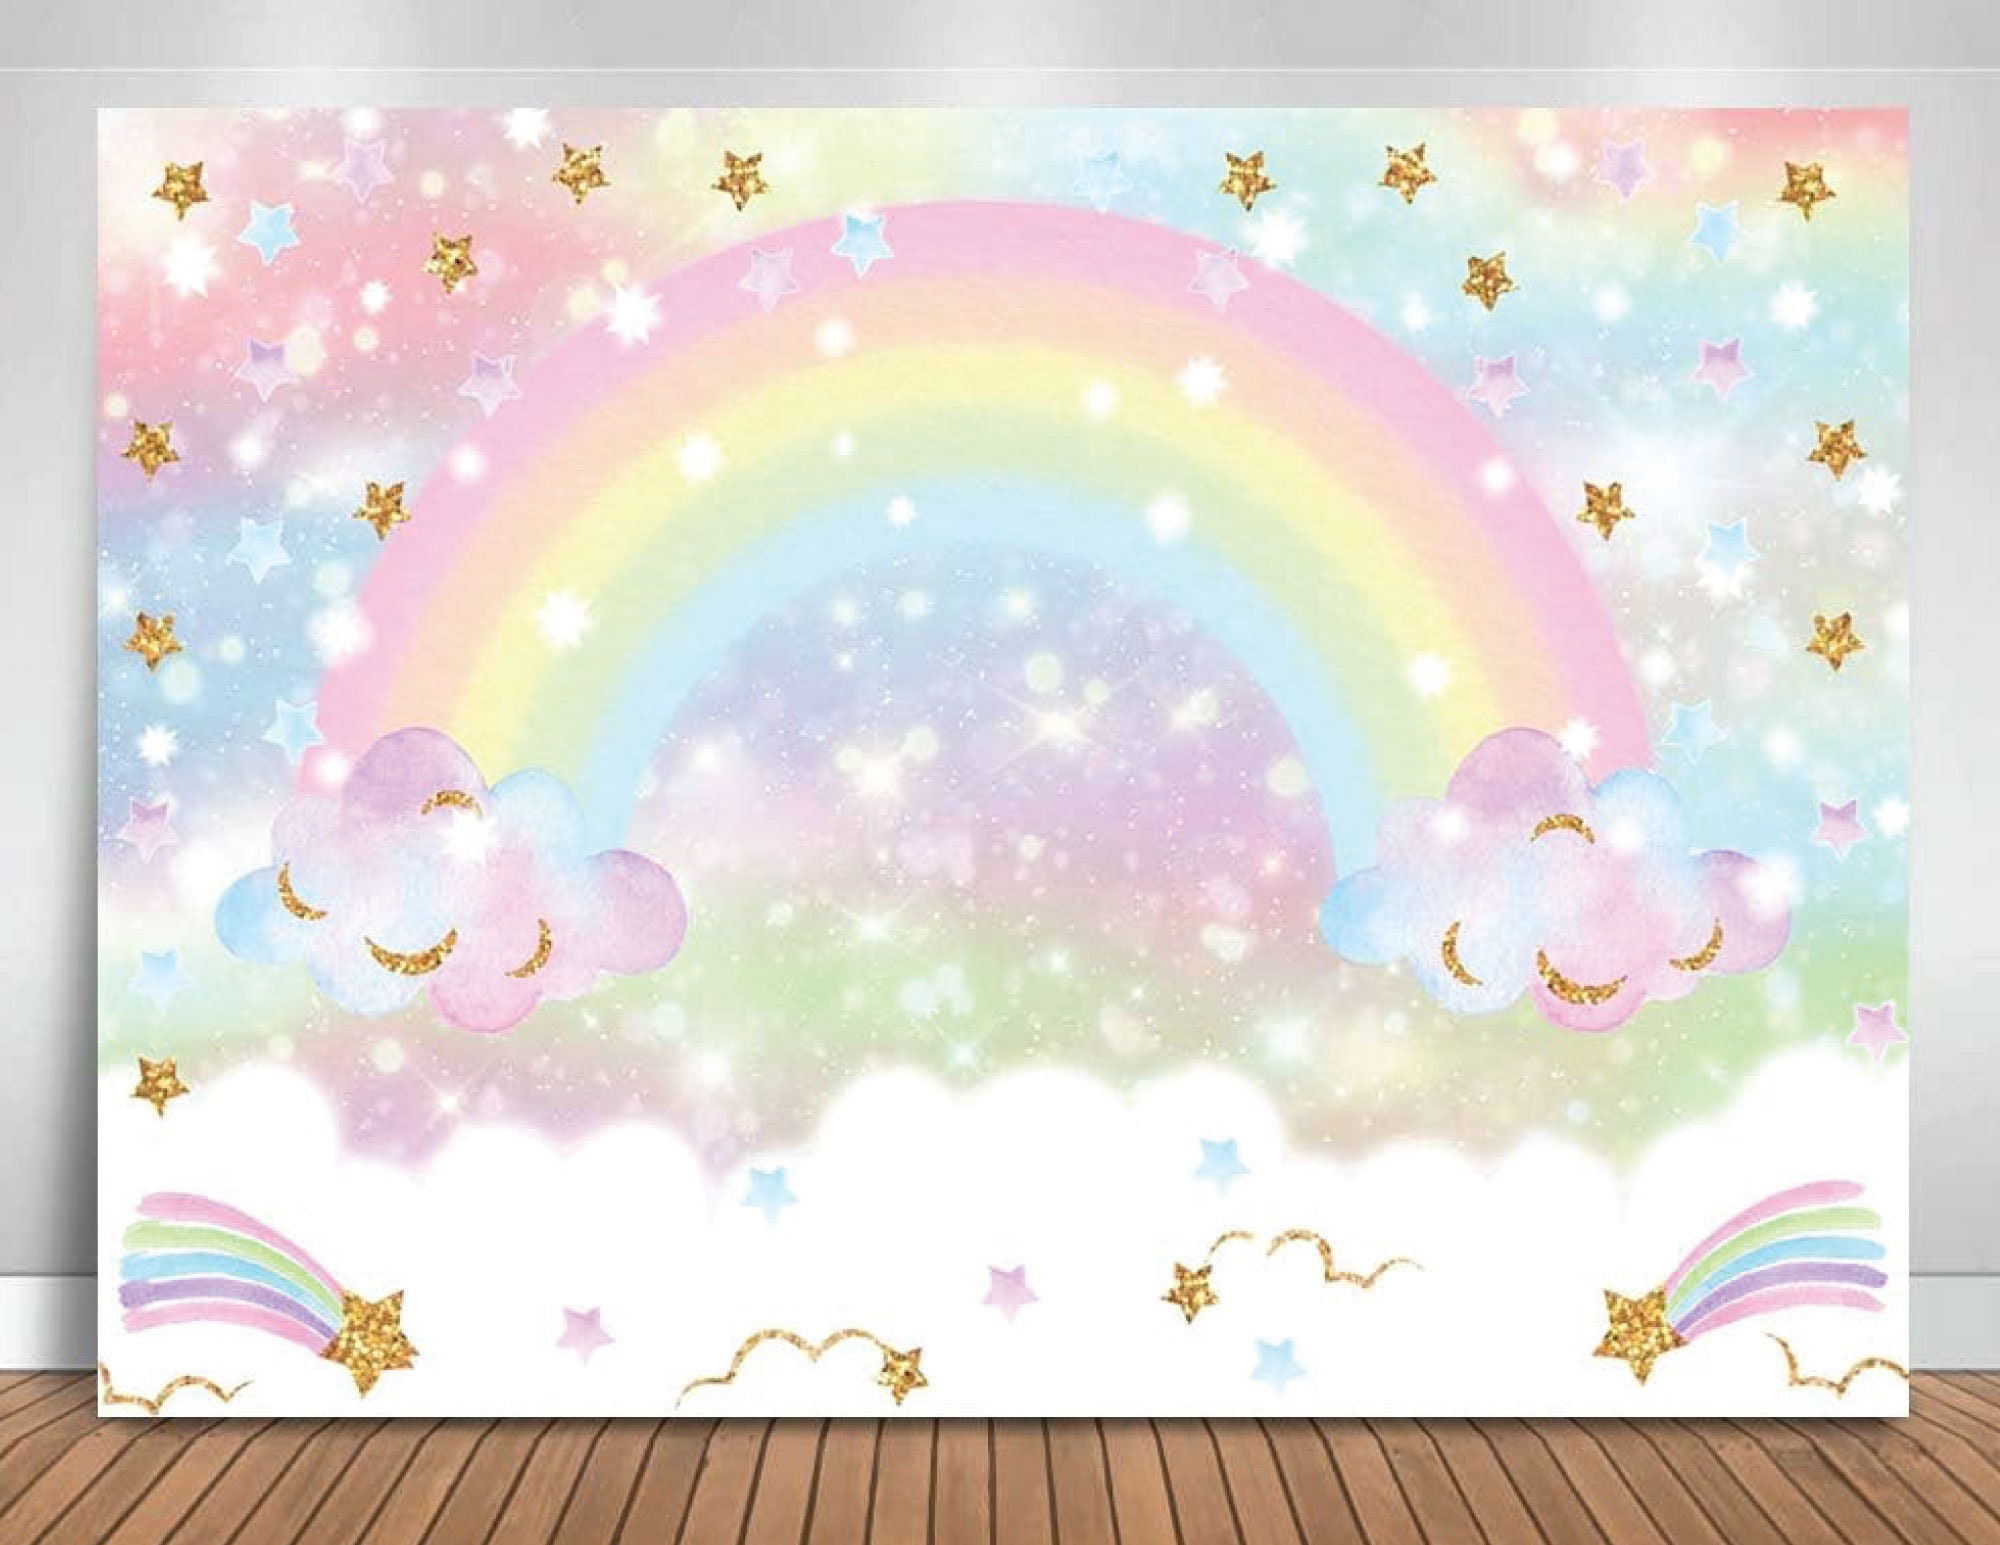 Rainbow Party theme backdrop walls. Vibrant color rainbow walls